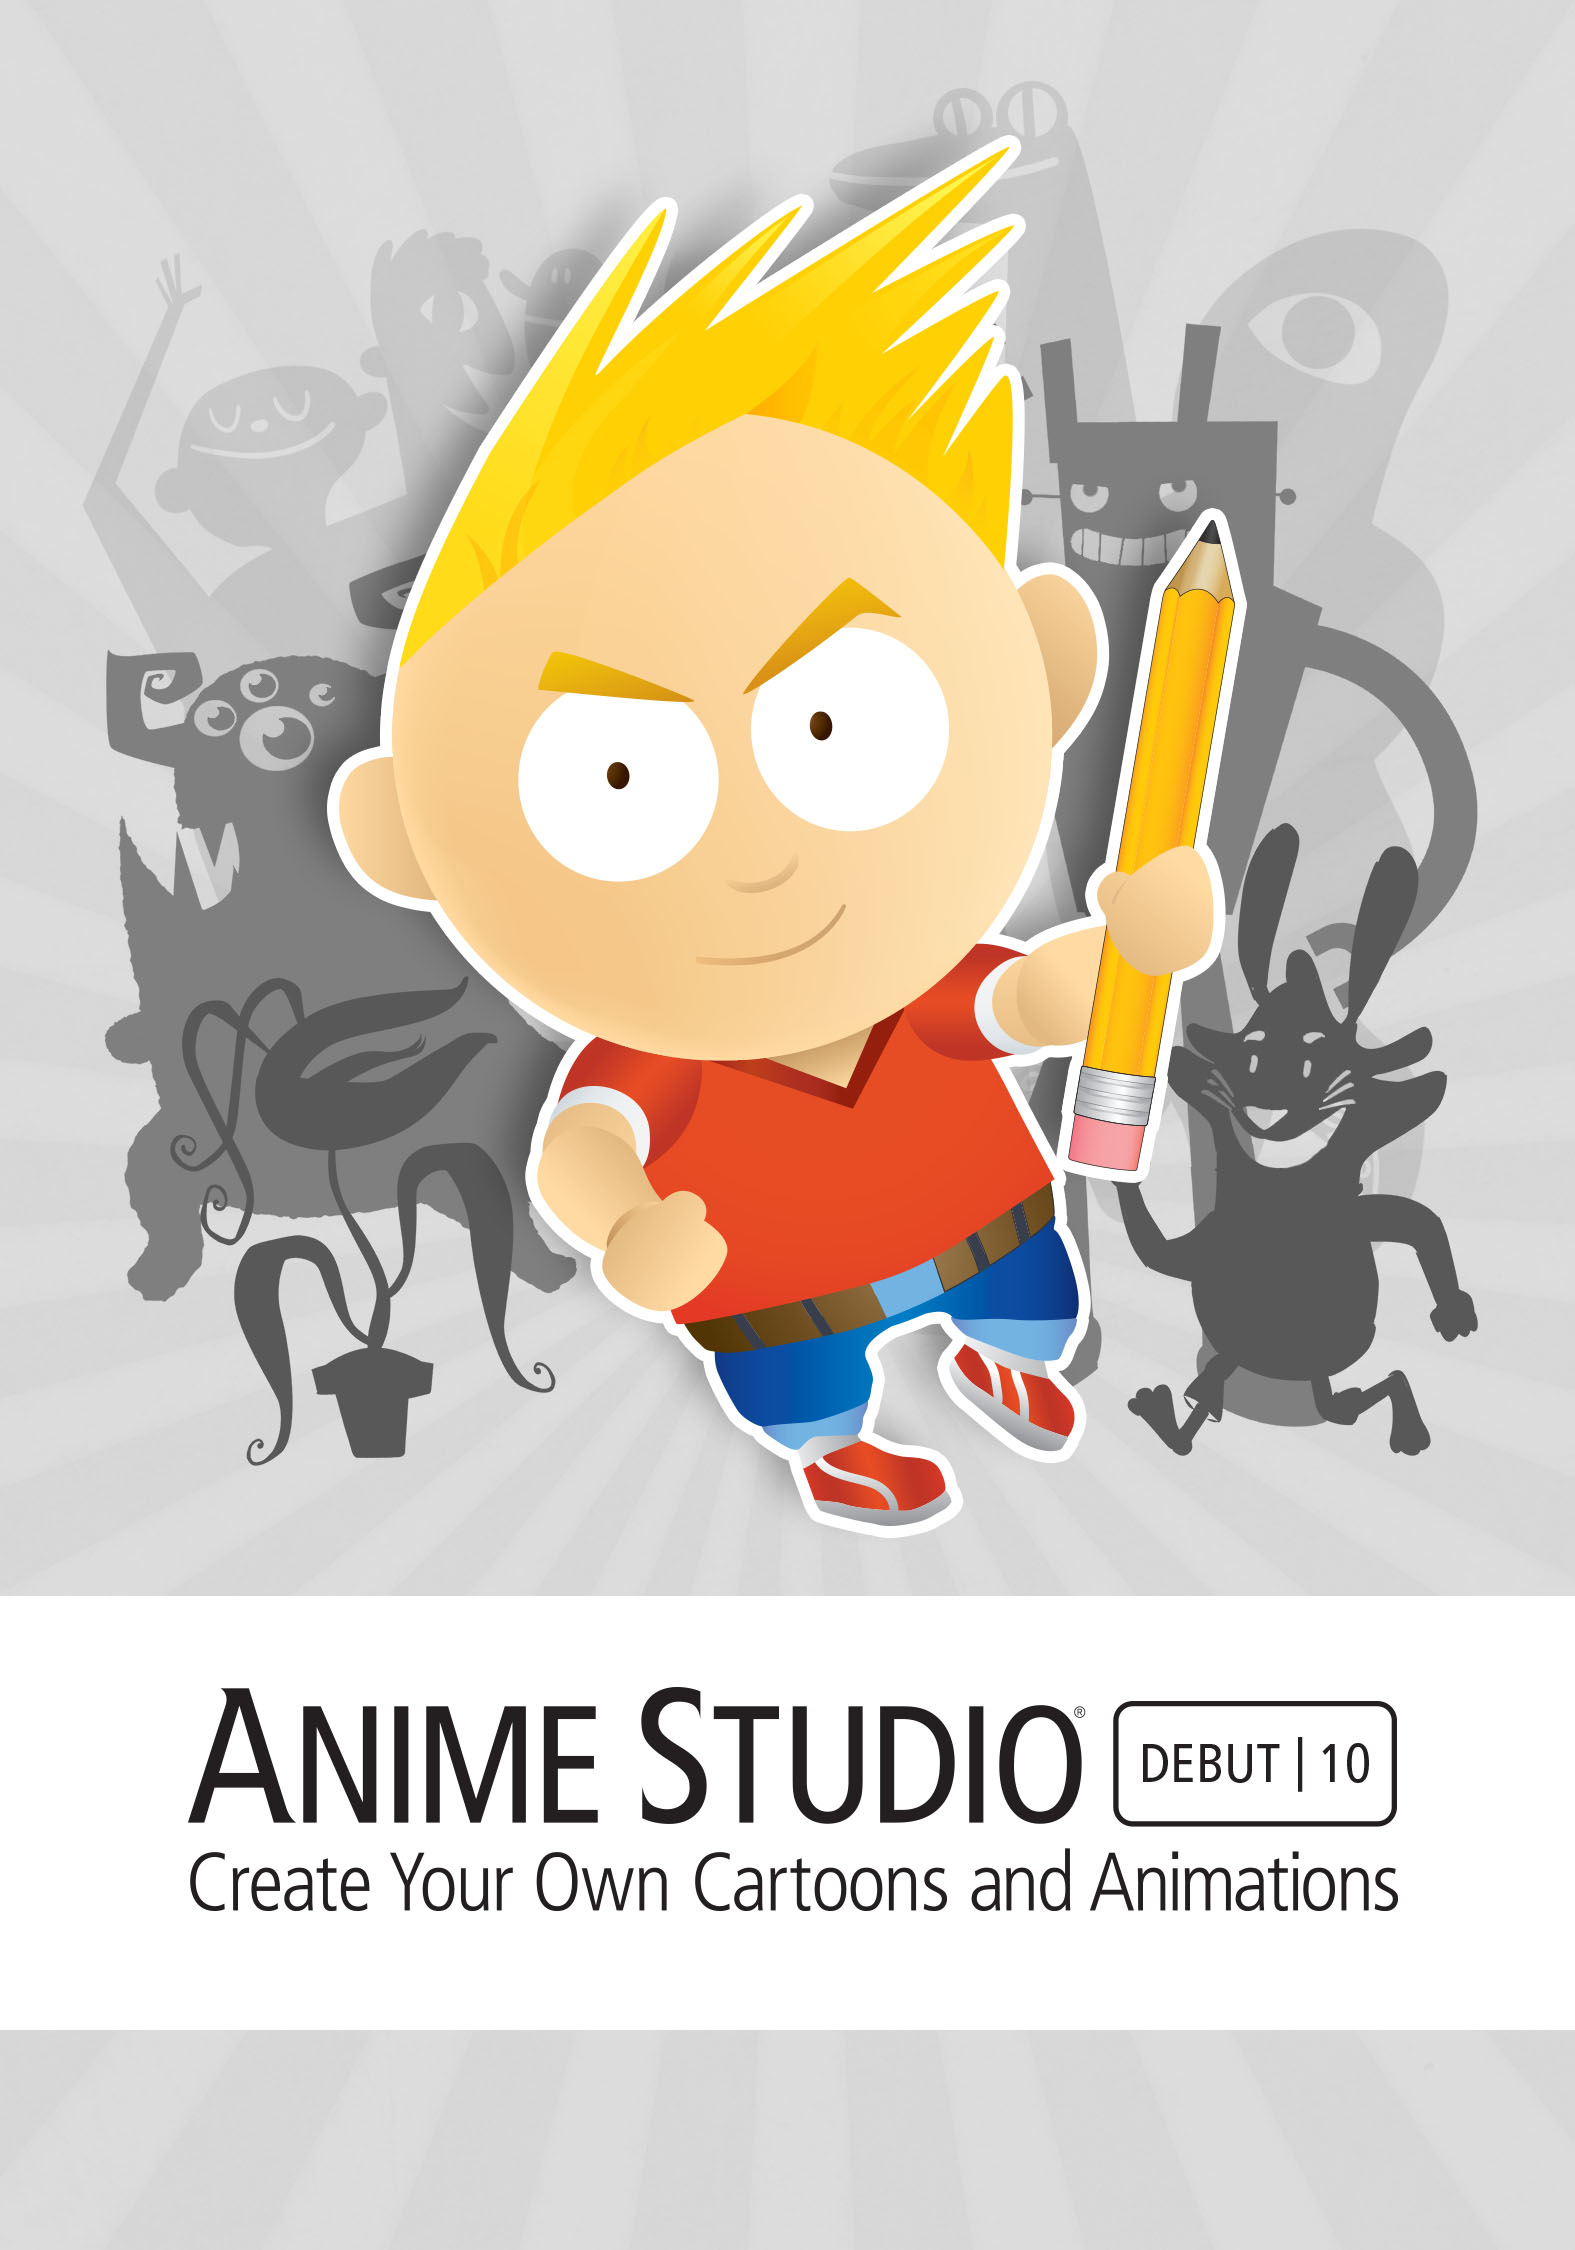 Smith Micro announces new Anime Studio 10 for Mac and Windows